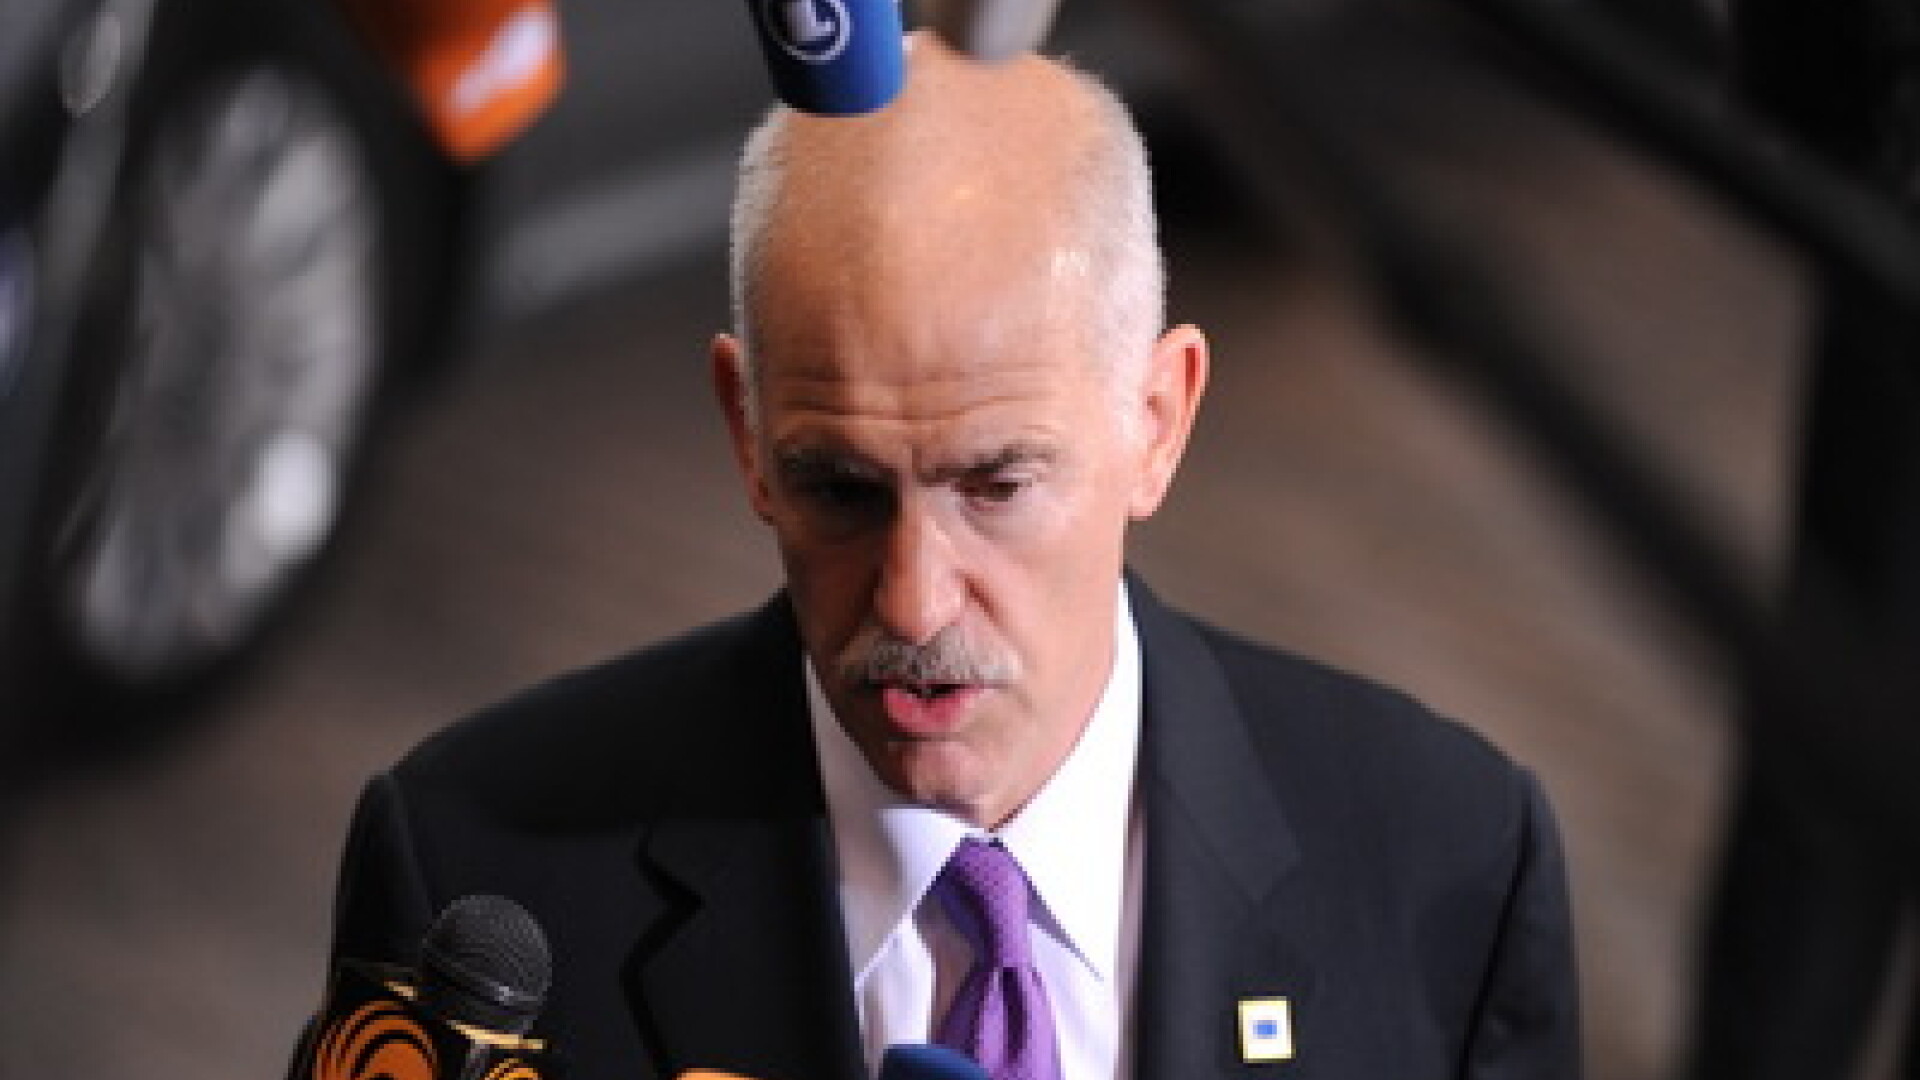 Premierul Greciei, George Papandreou